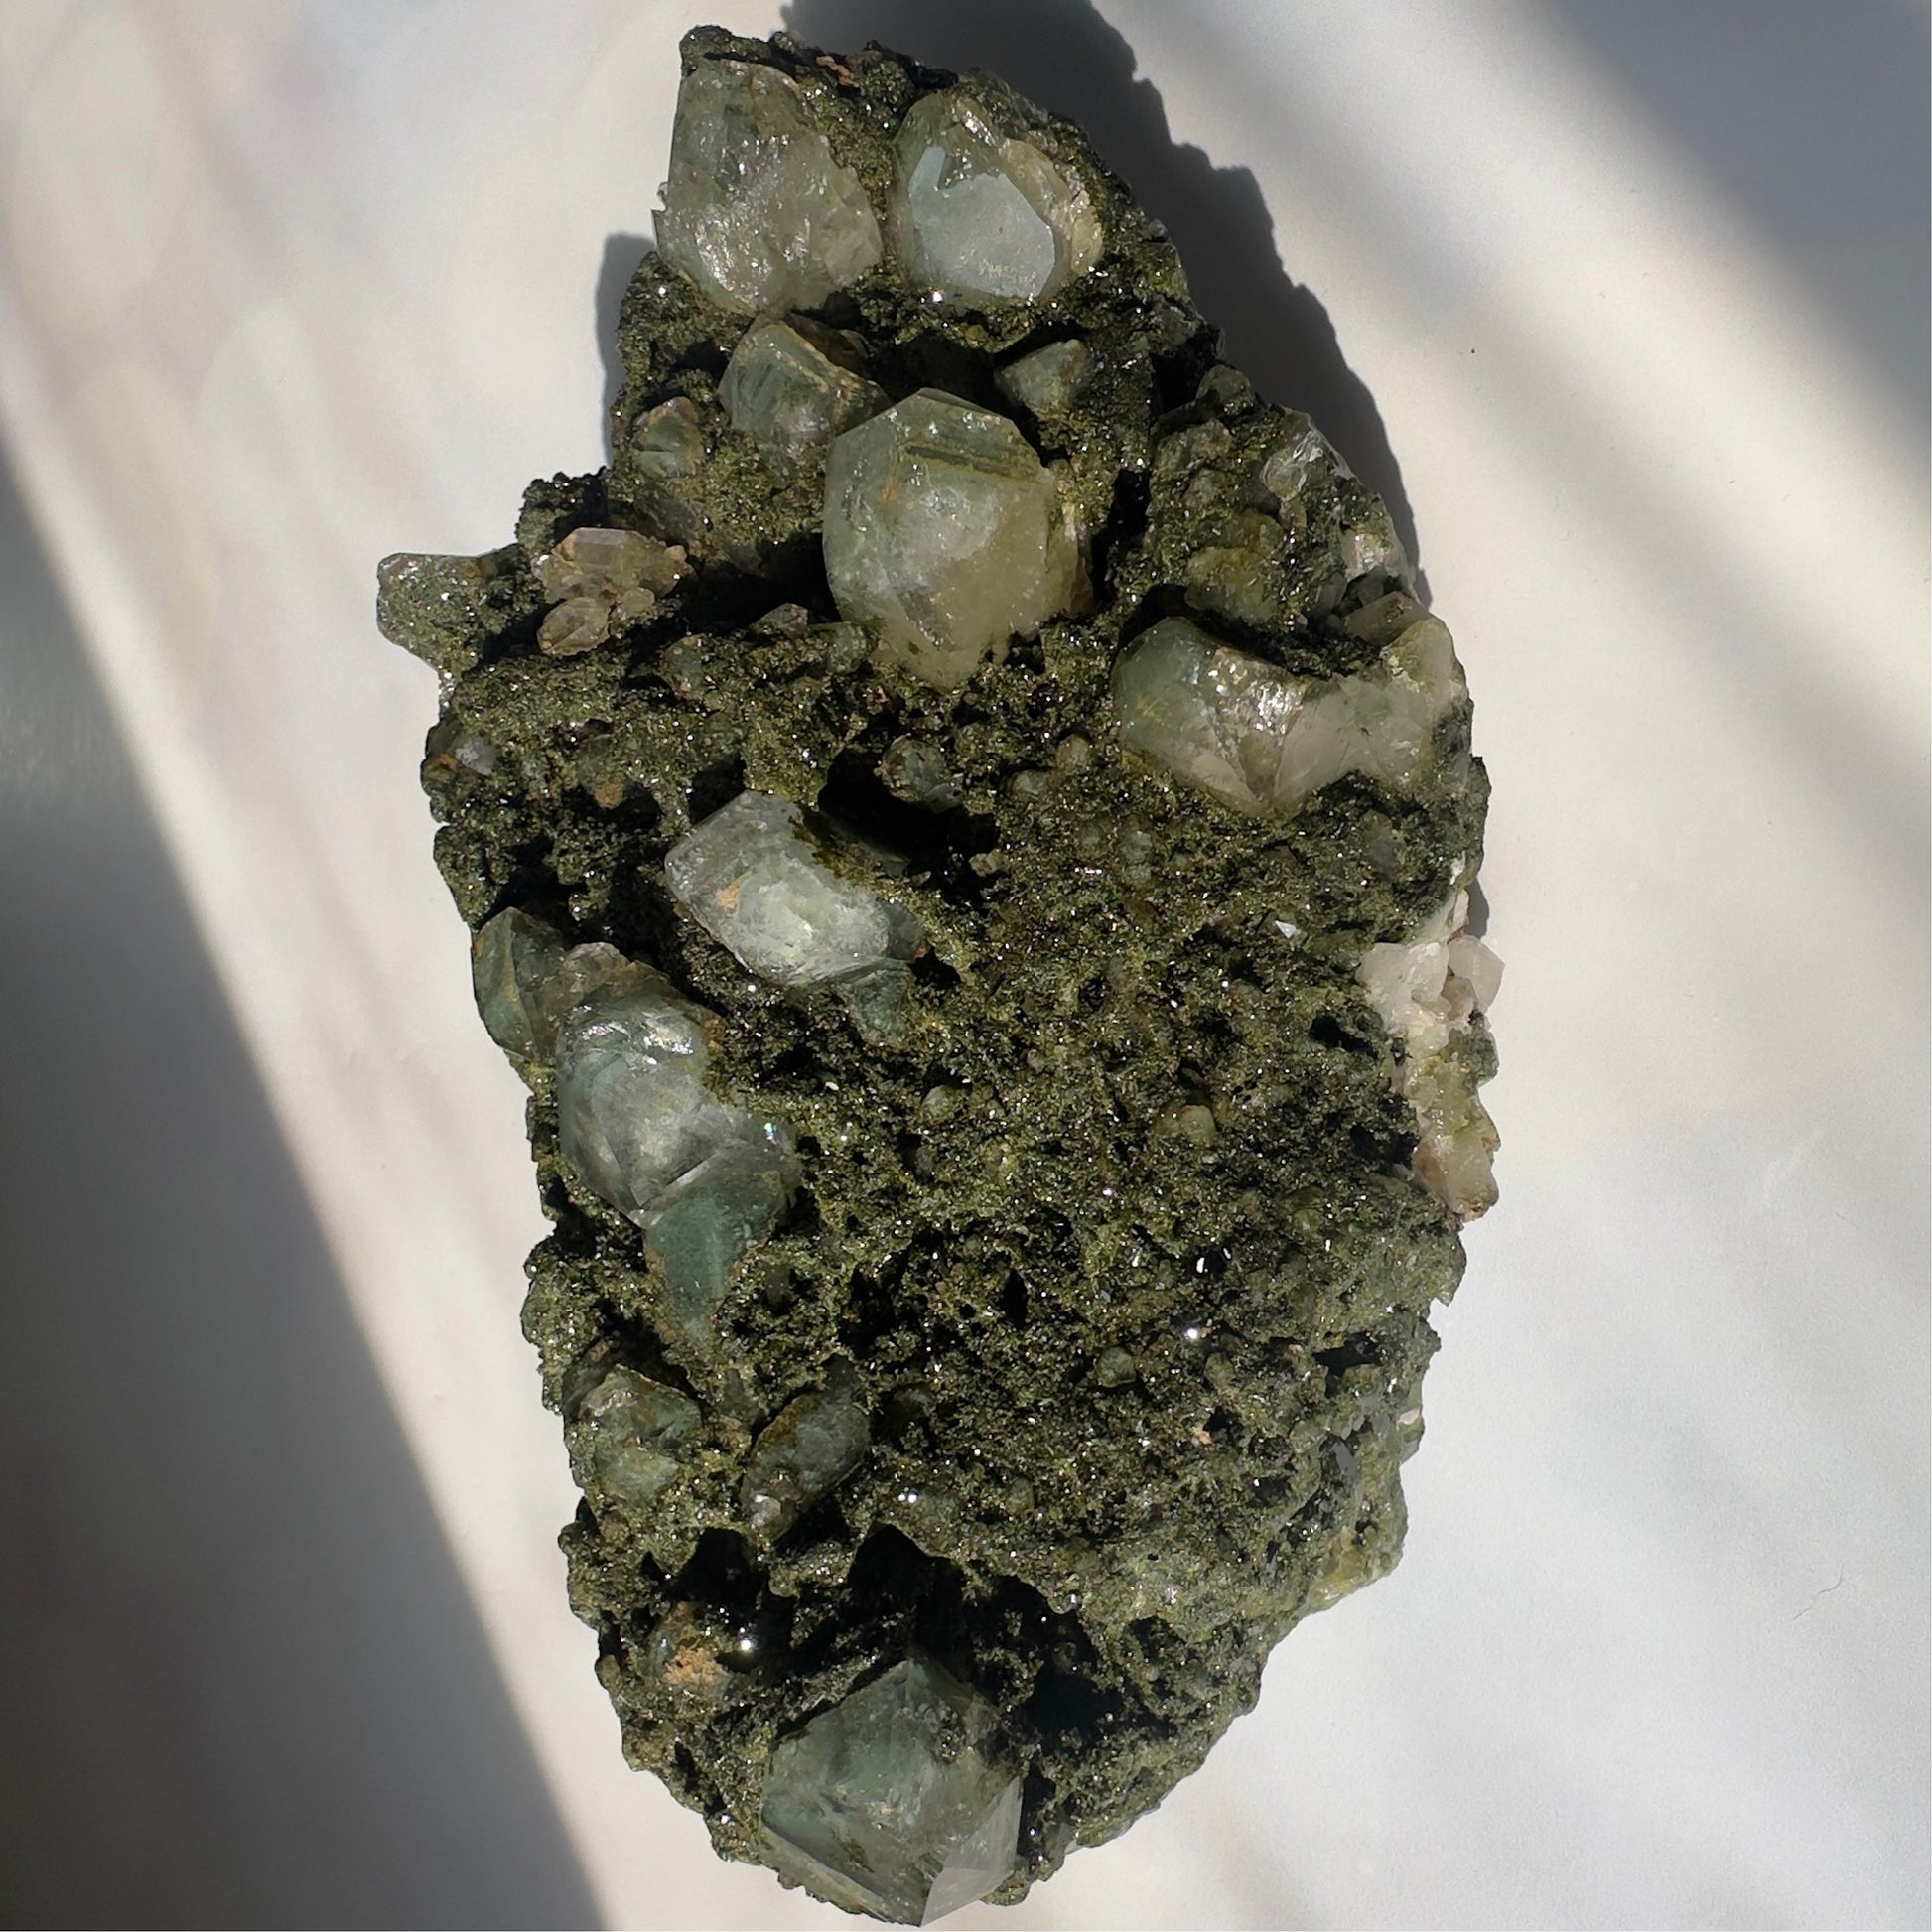 Amazing Epidote On Quartz With Phantoms Genuine Dark Green Crystal Cluster Specimen From Turkey | Tucson Gem Show Exclusive